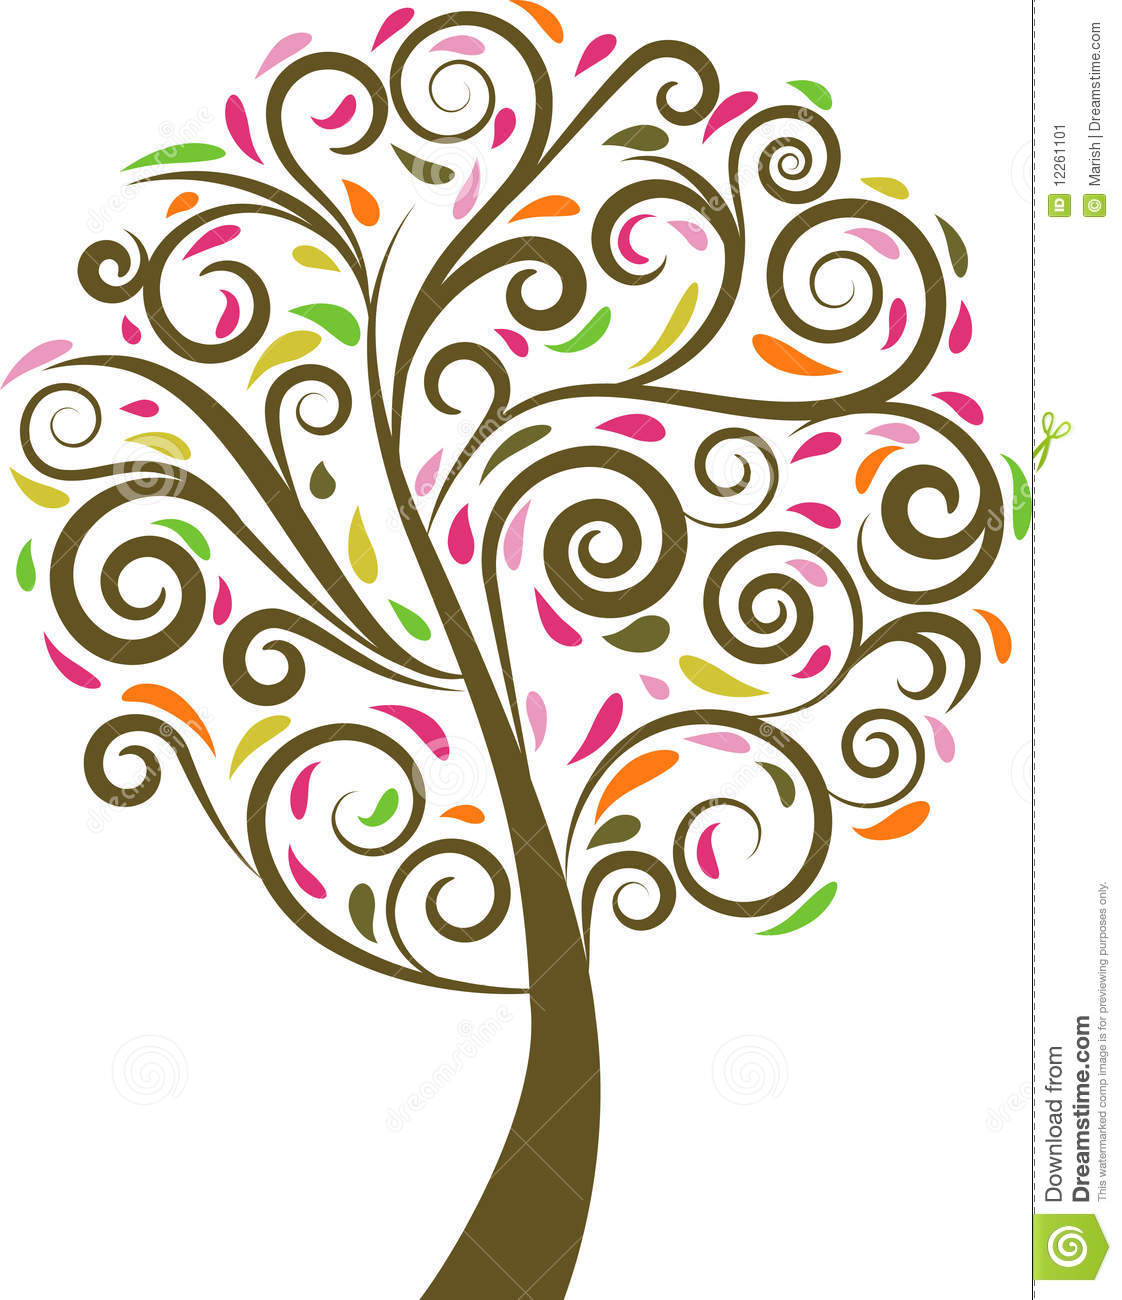 Floral Swirl Tree Stock Image   Image  12261101